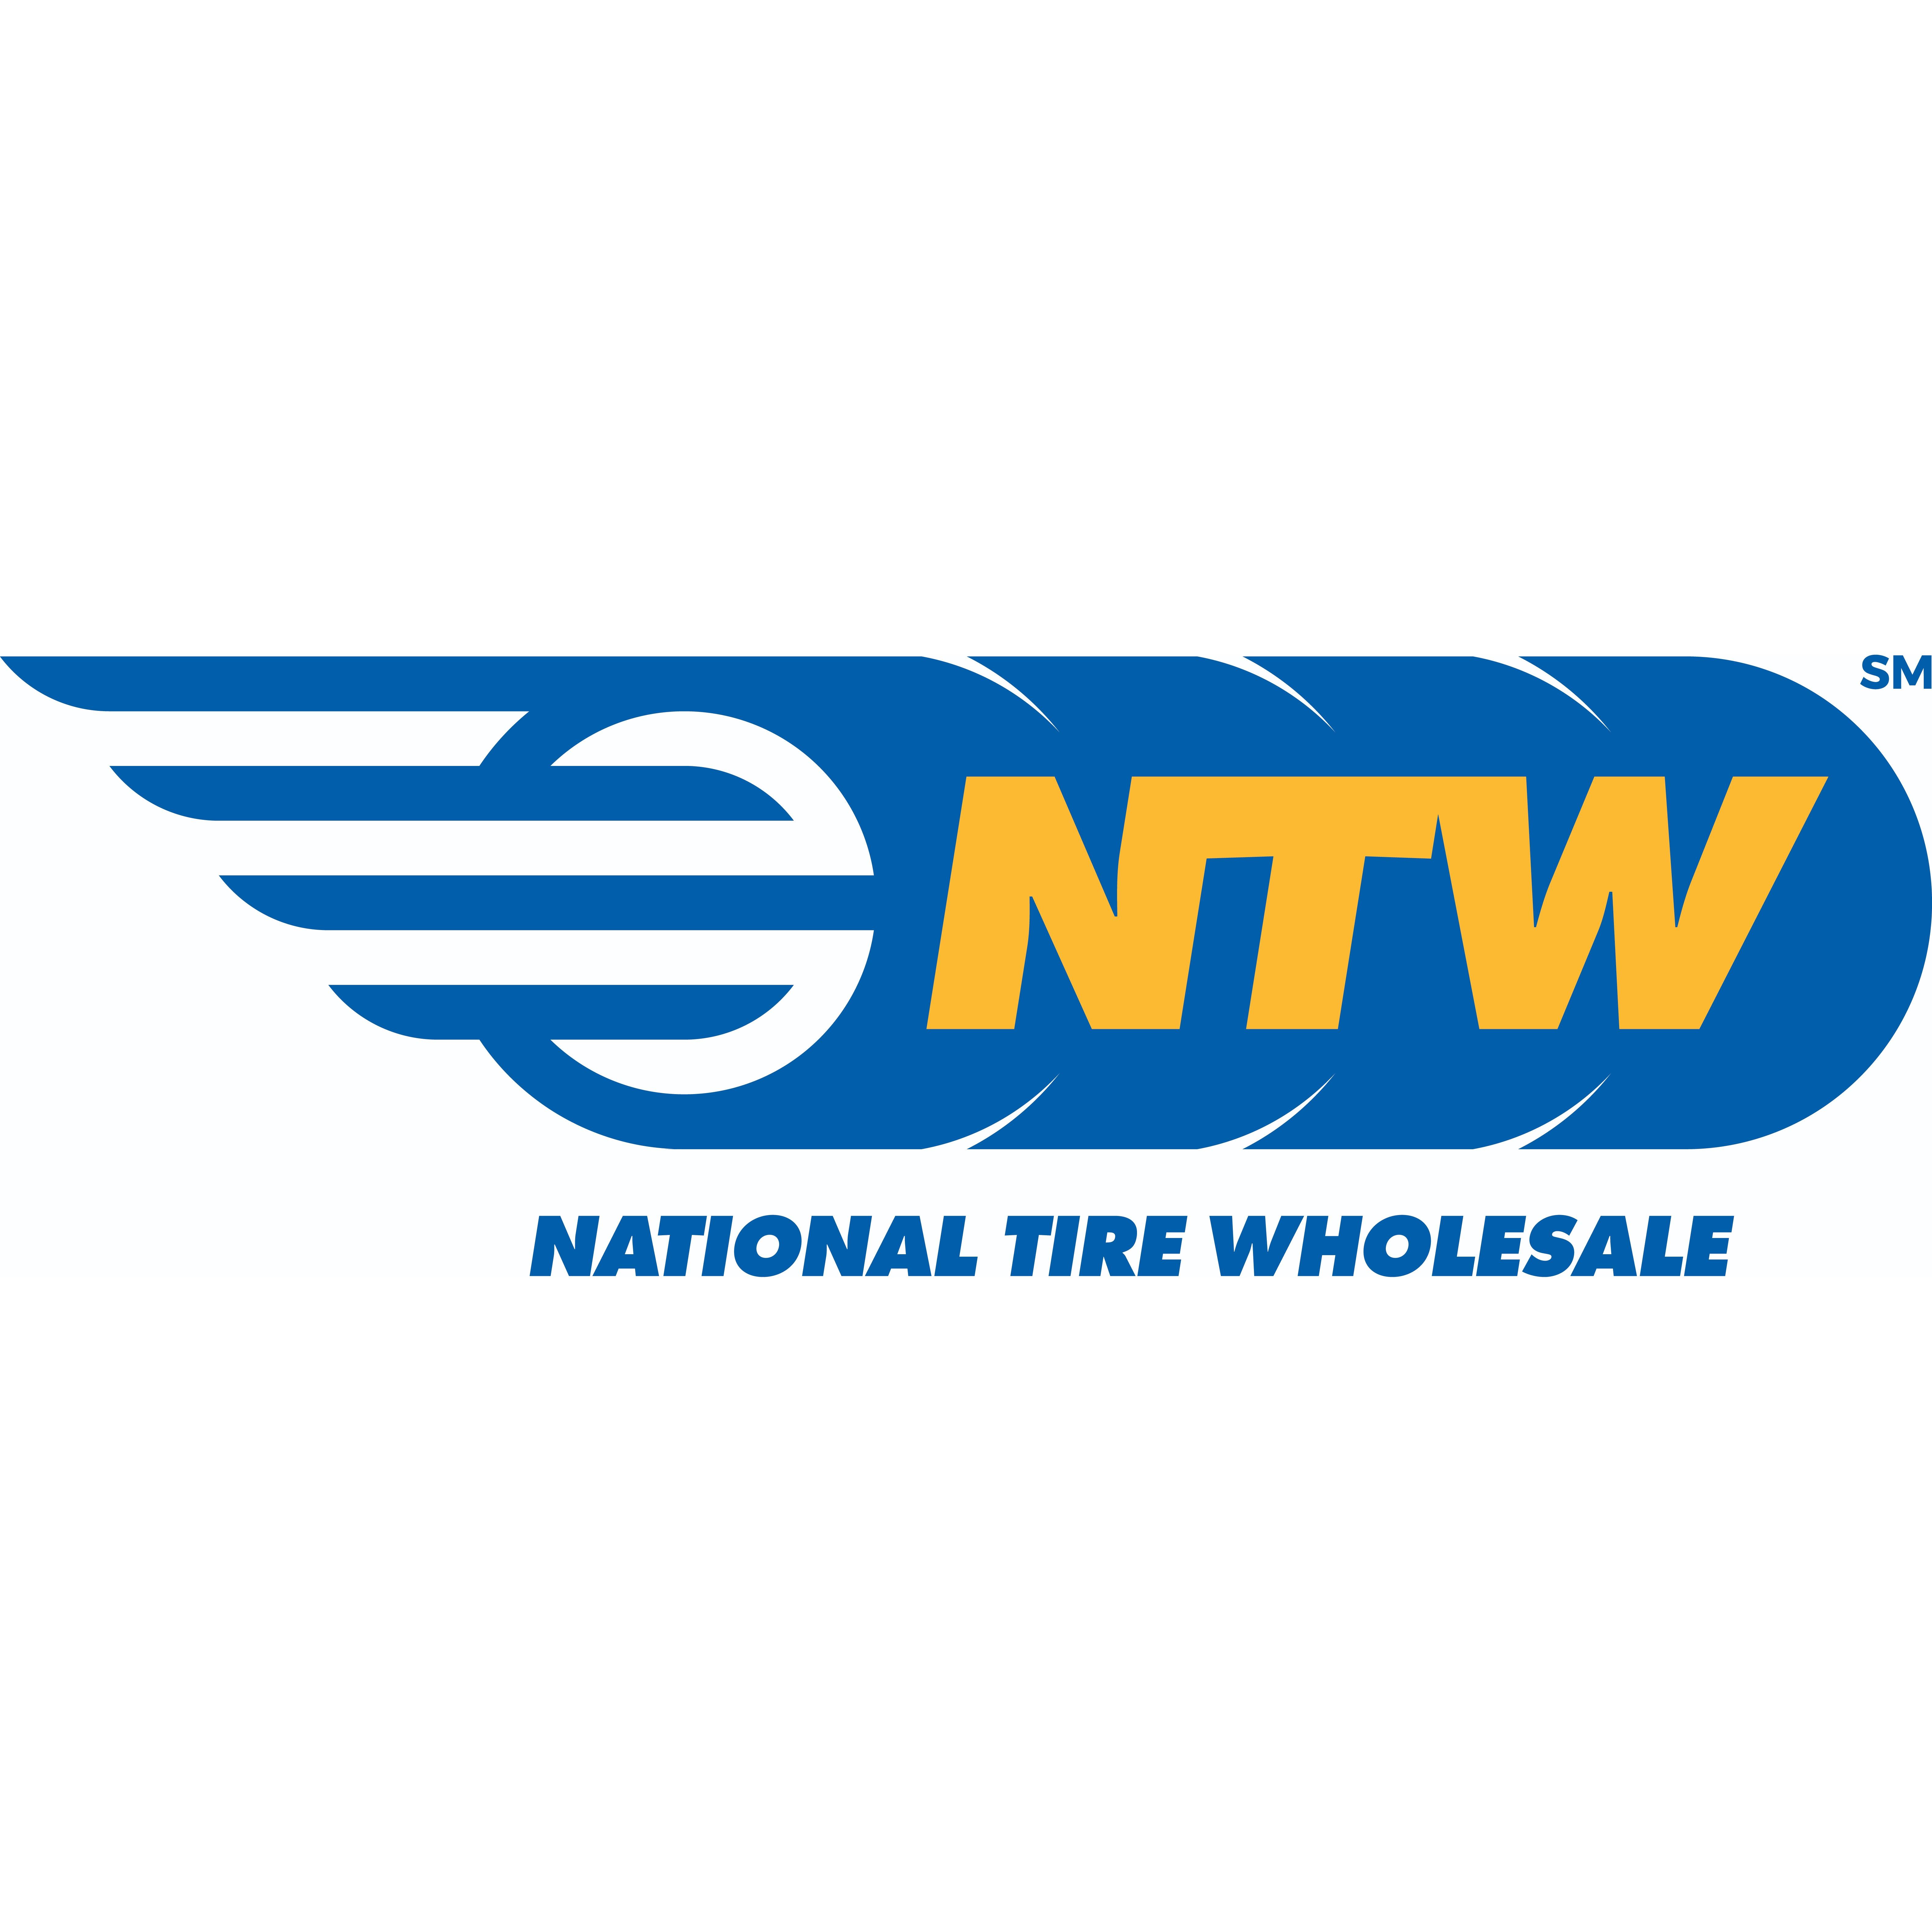 NTW - National Tire Wholesale - Spokane, WA 99216 - (509)927-1028 | ShowMeLocal.com